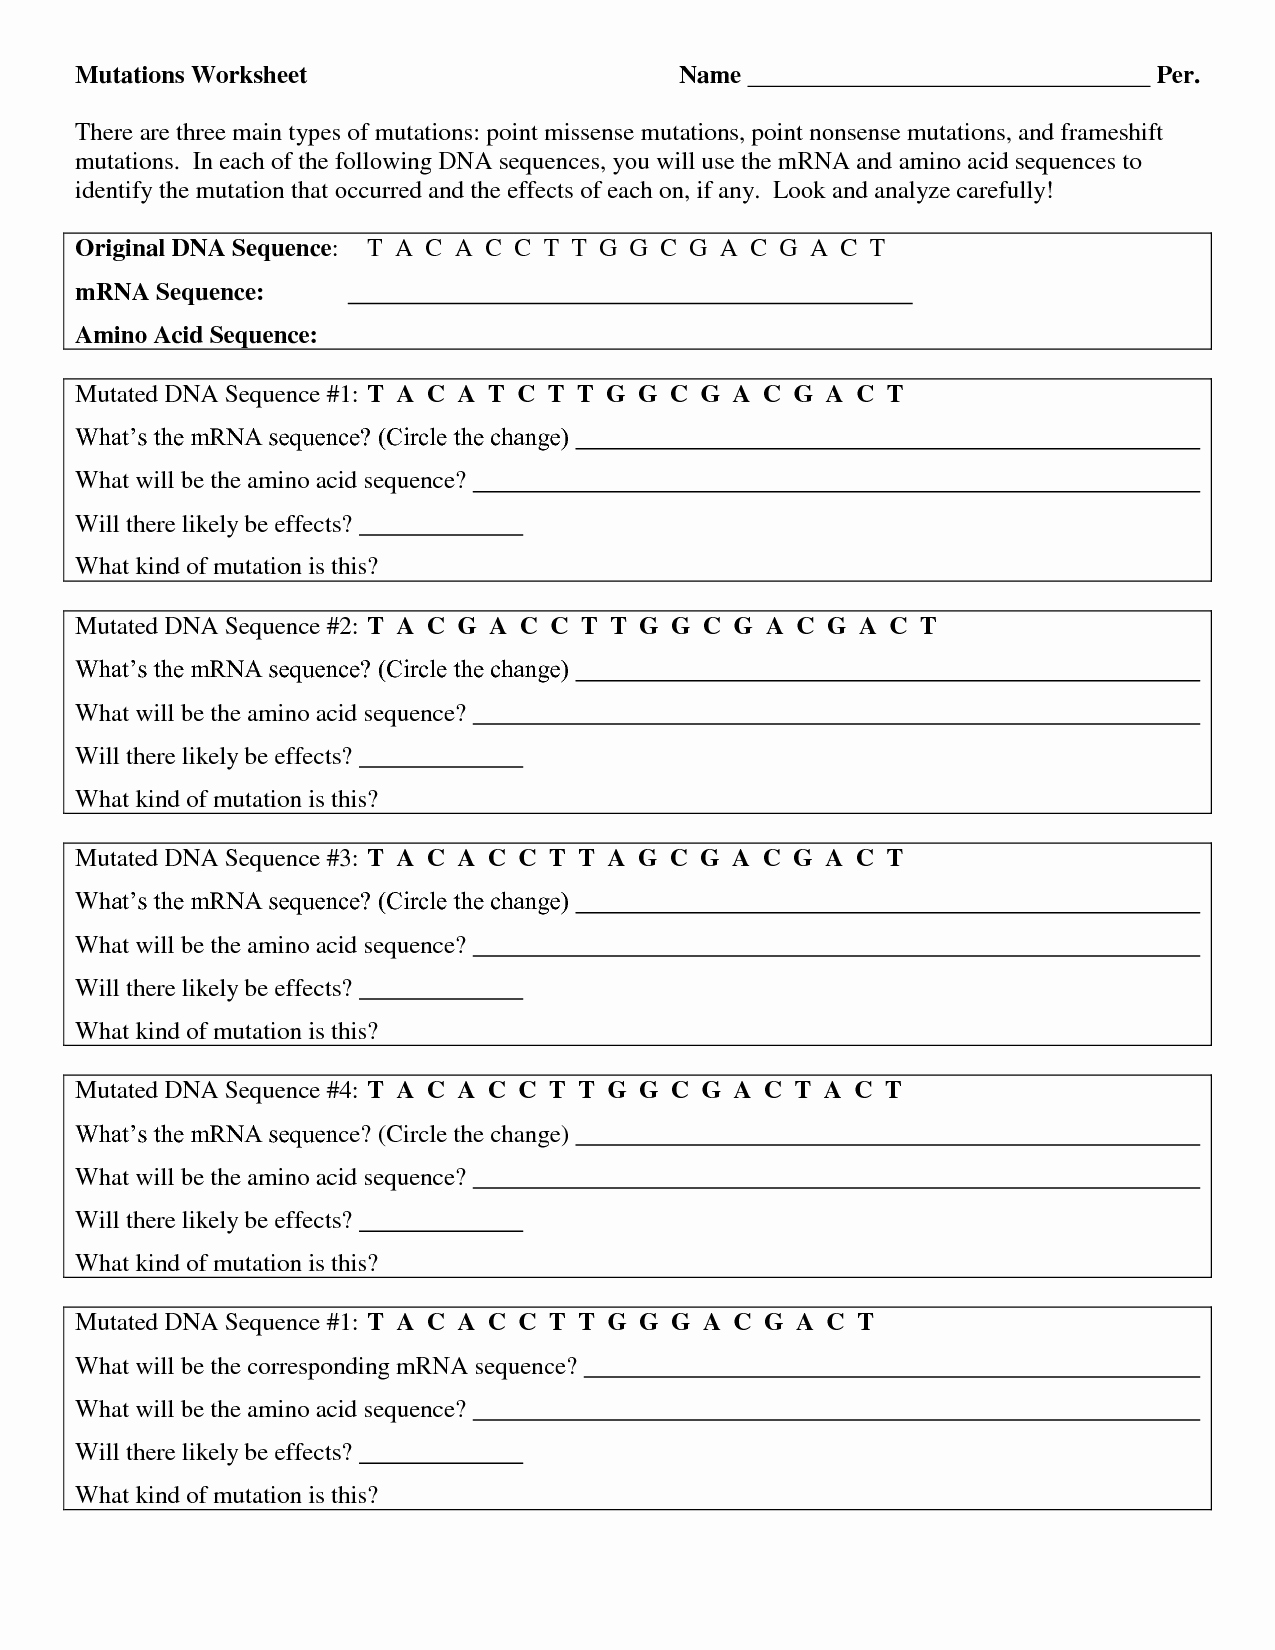 Mutations Worksheet Answer Key Luxury 17 Best Of Dna Mutations Practice Worksheet Page 2